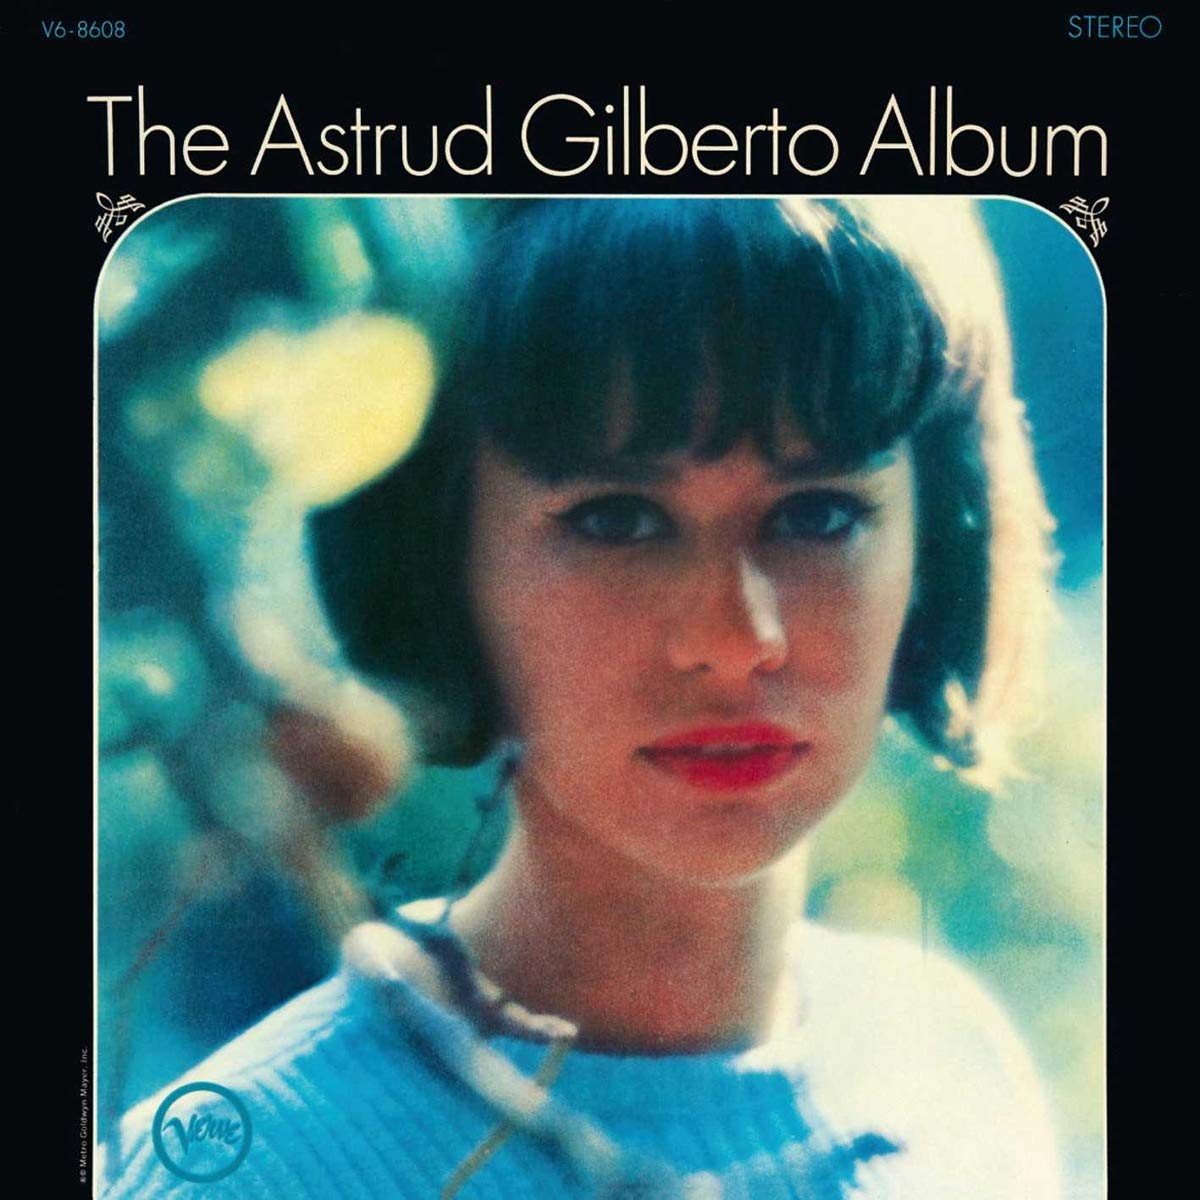 Astrud Gilberto "Astrud Gilberto Album" LP